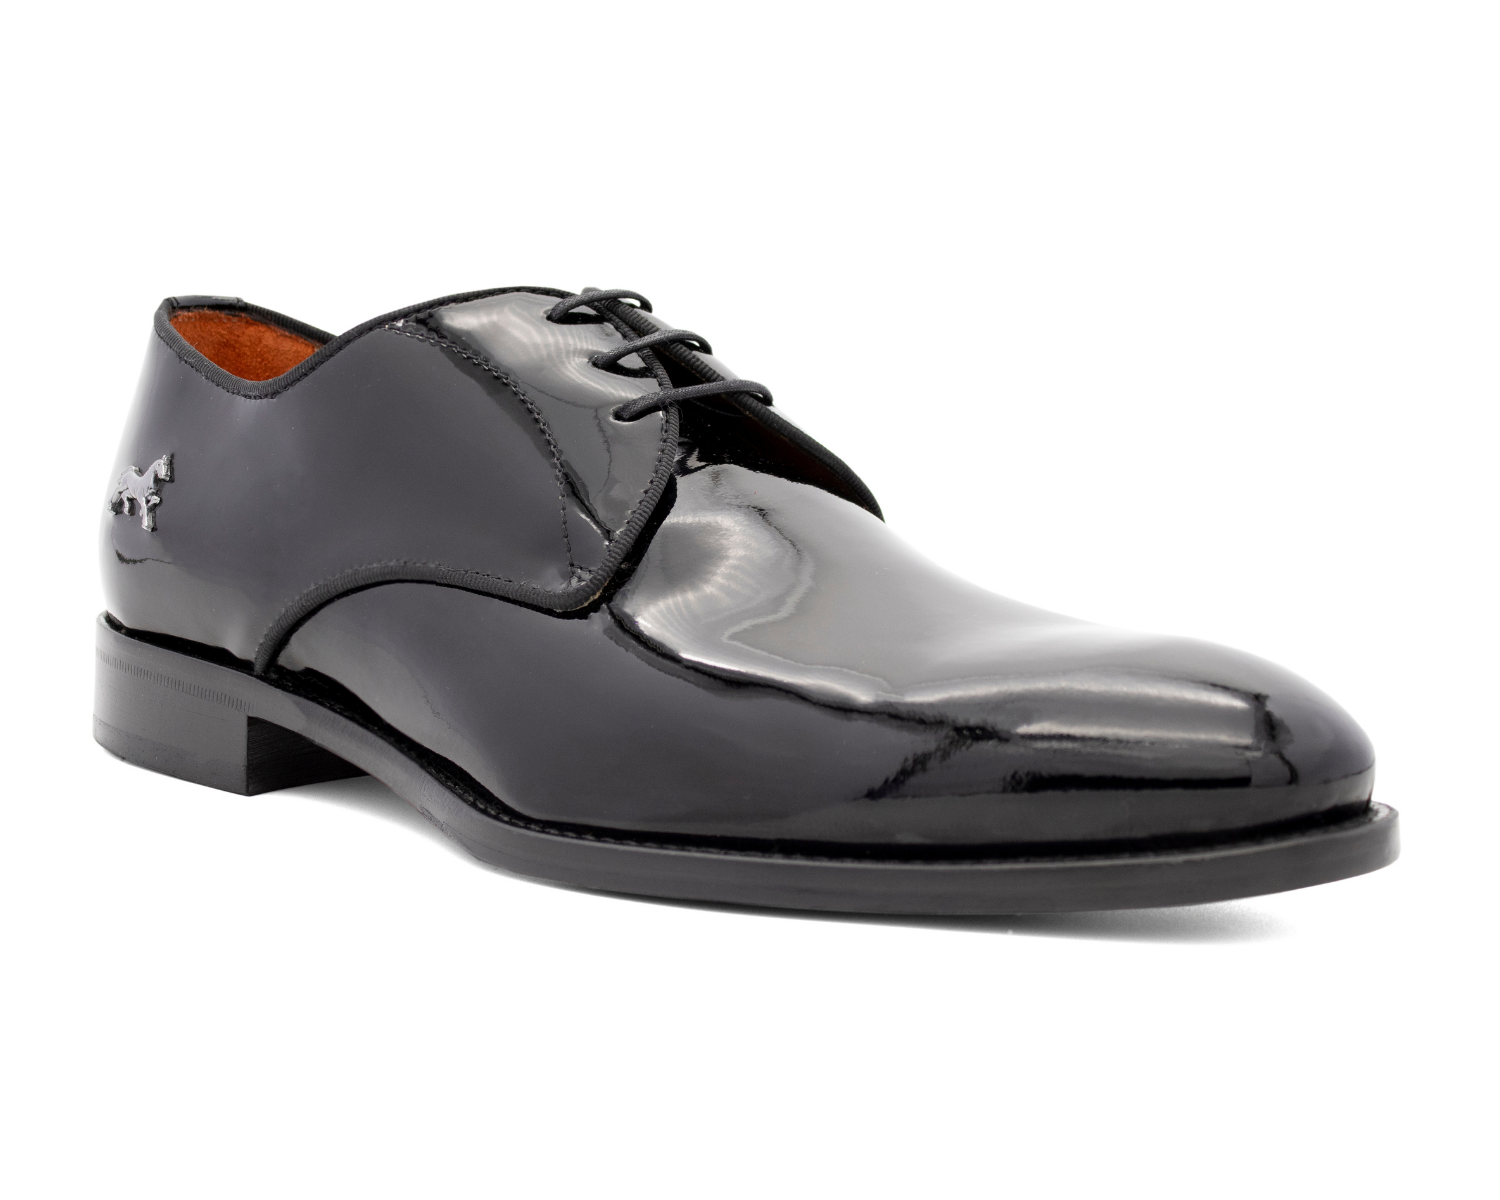 Cavalinho Patent Leather Oxford Shoes - Black - 2_bc44dea9-983a-4a2d-bf74-39015c39dae2